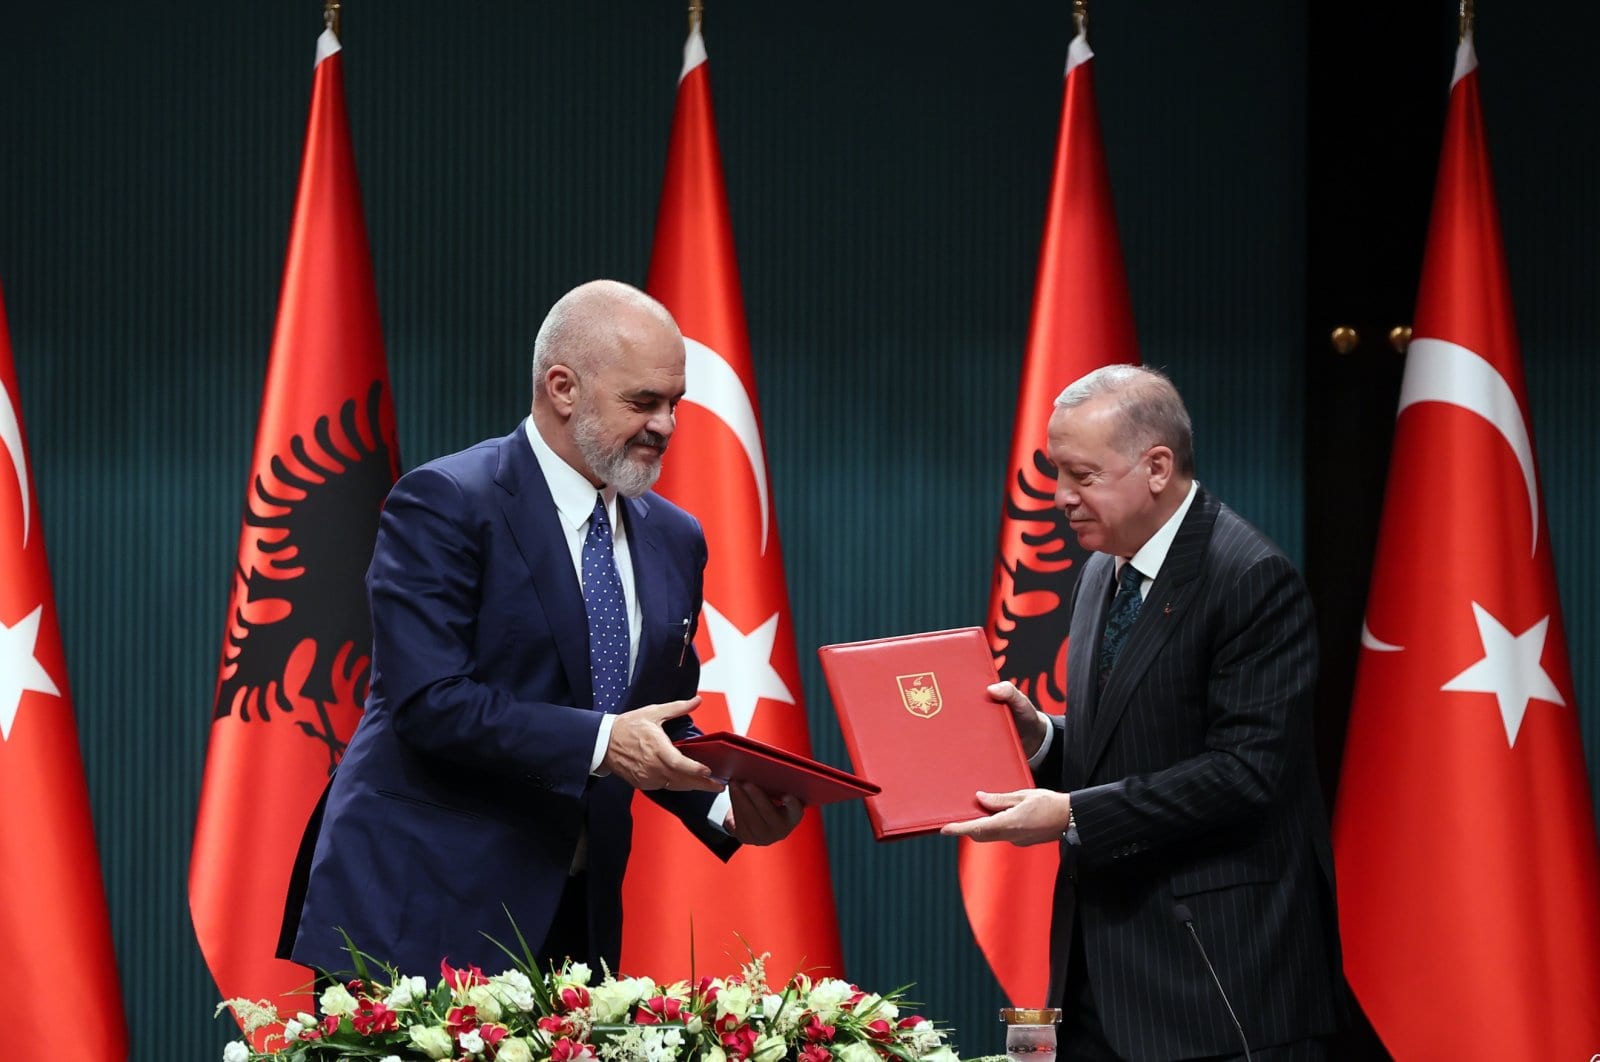 Turkey, Albania sign deal to upgrade bilateral ties to strategic partnership level